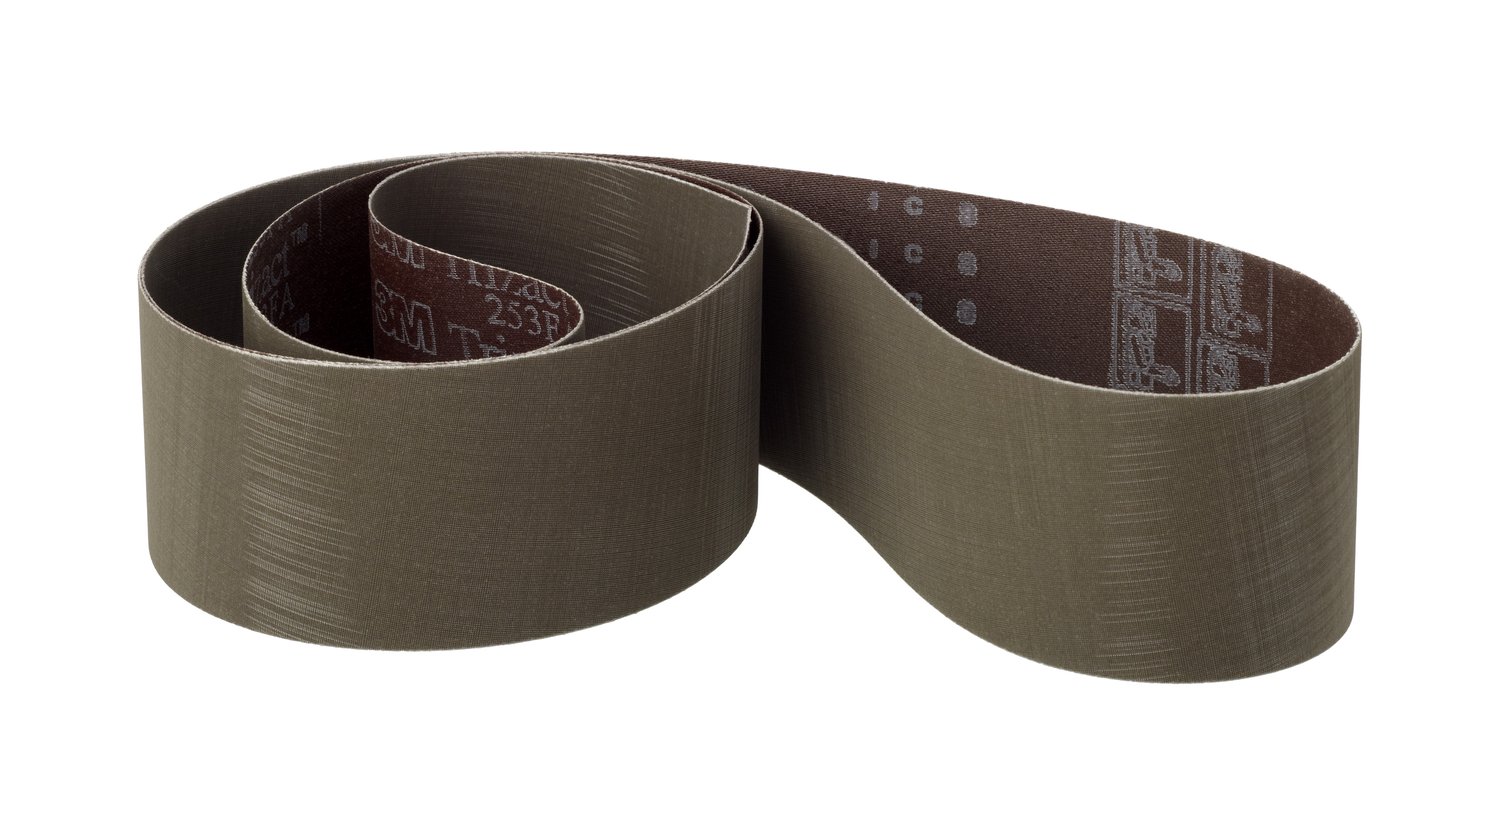 7010516212 - 3M Trizact Cloth Belt 253FA, A16 XF-weight, 19 in x 60 in, Film-lok,
Full-flex